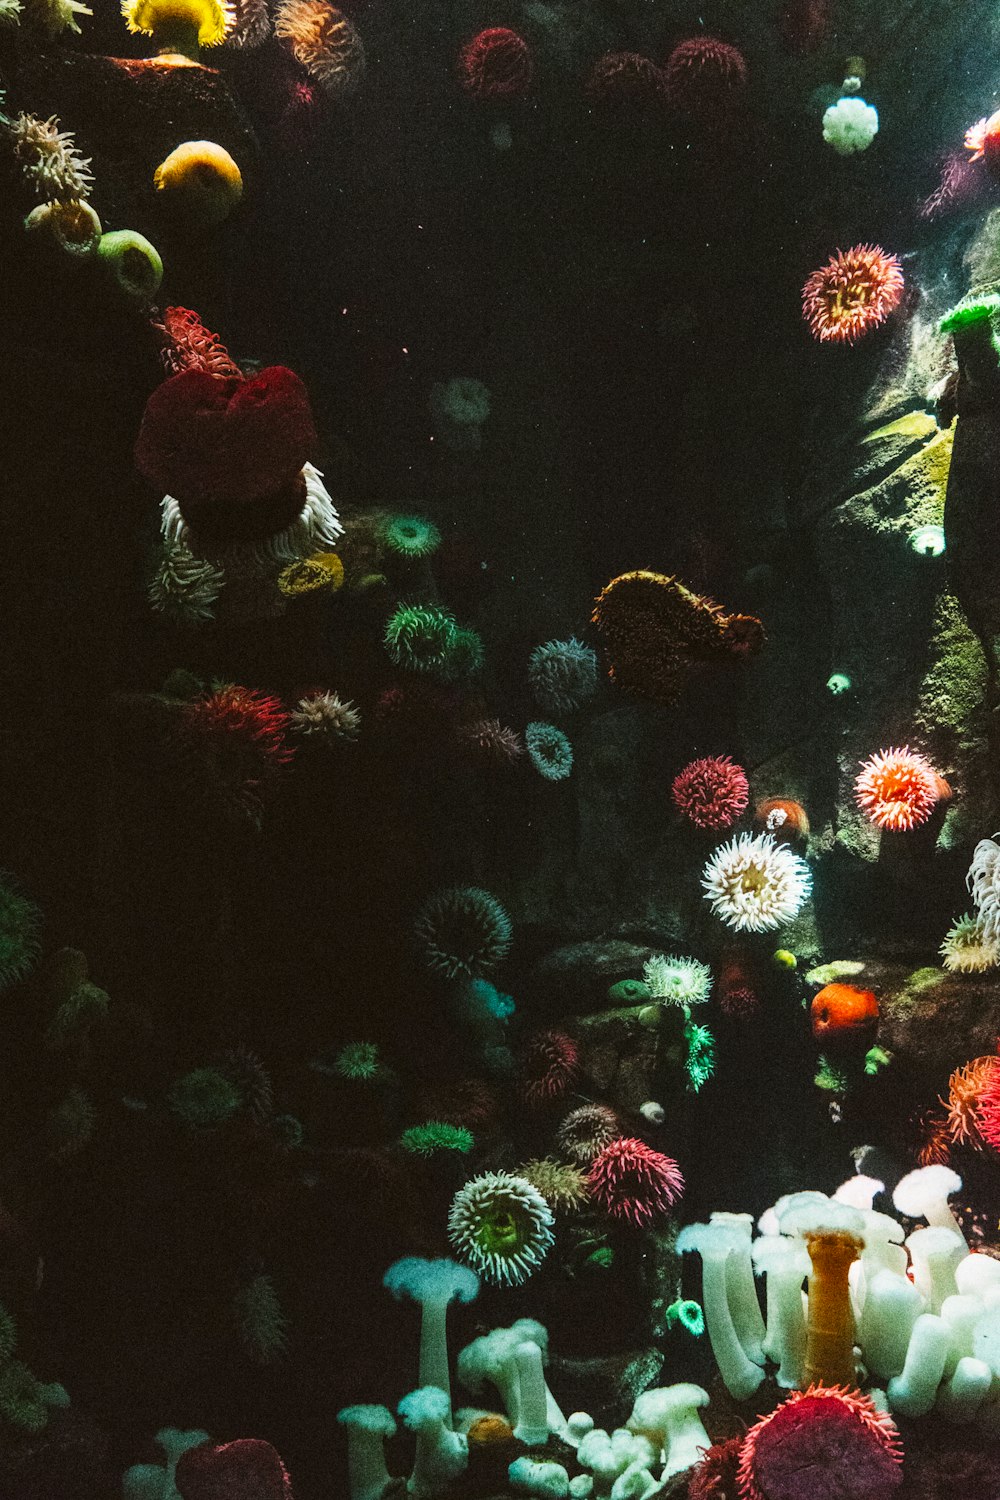 Fotografie von Meereskorallen